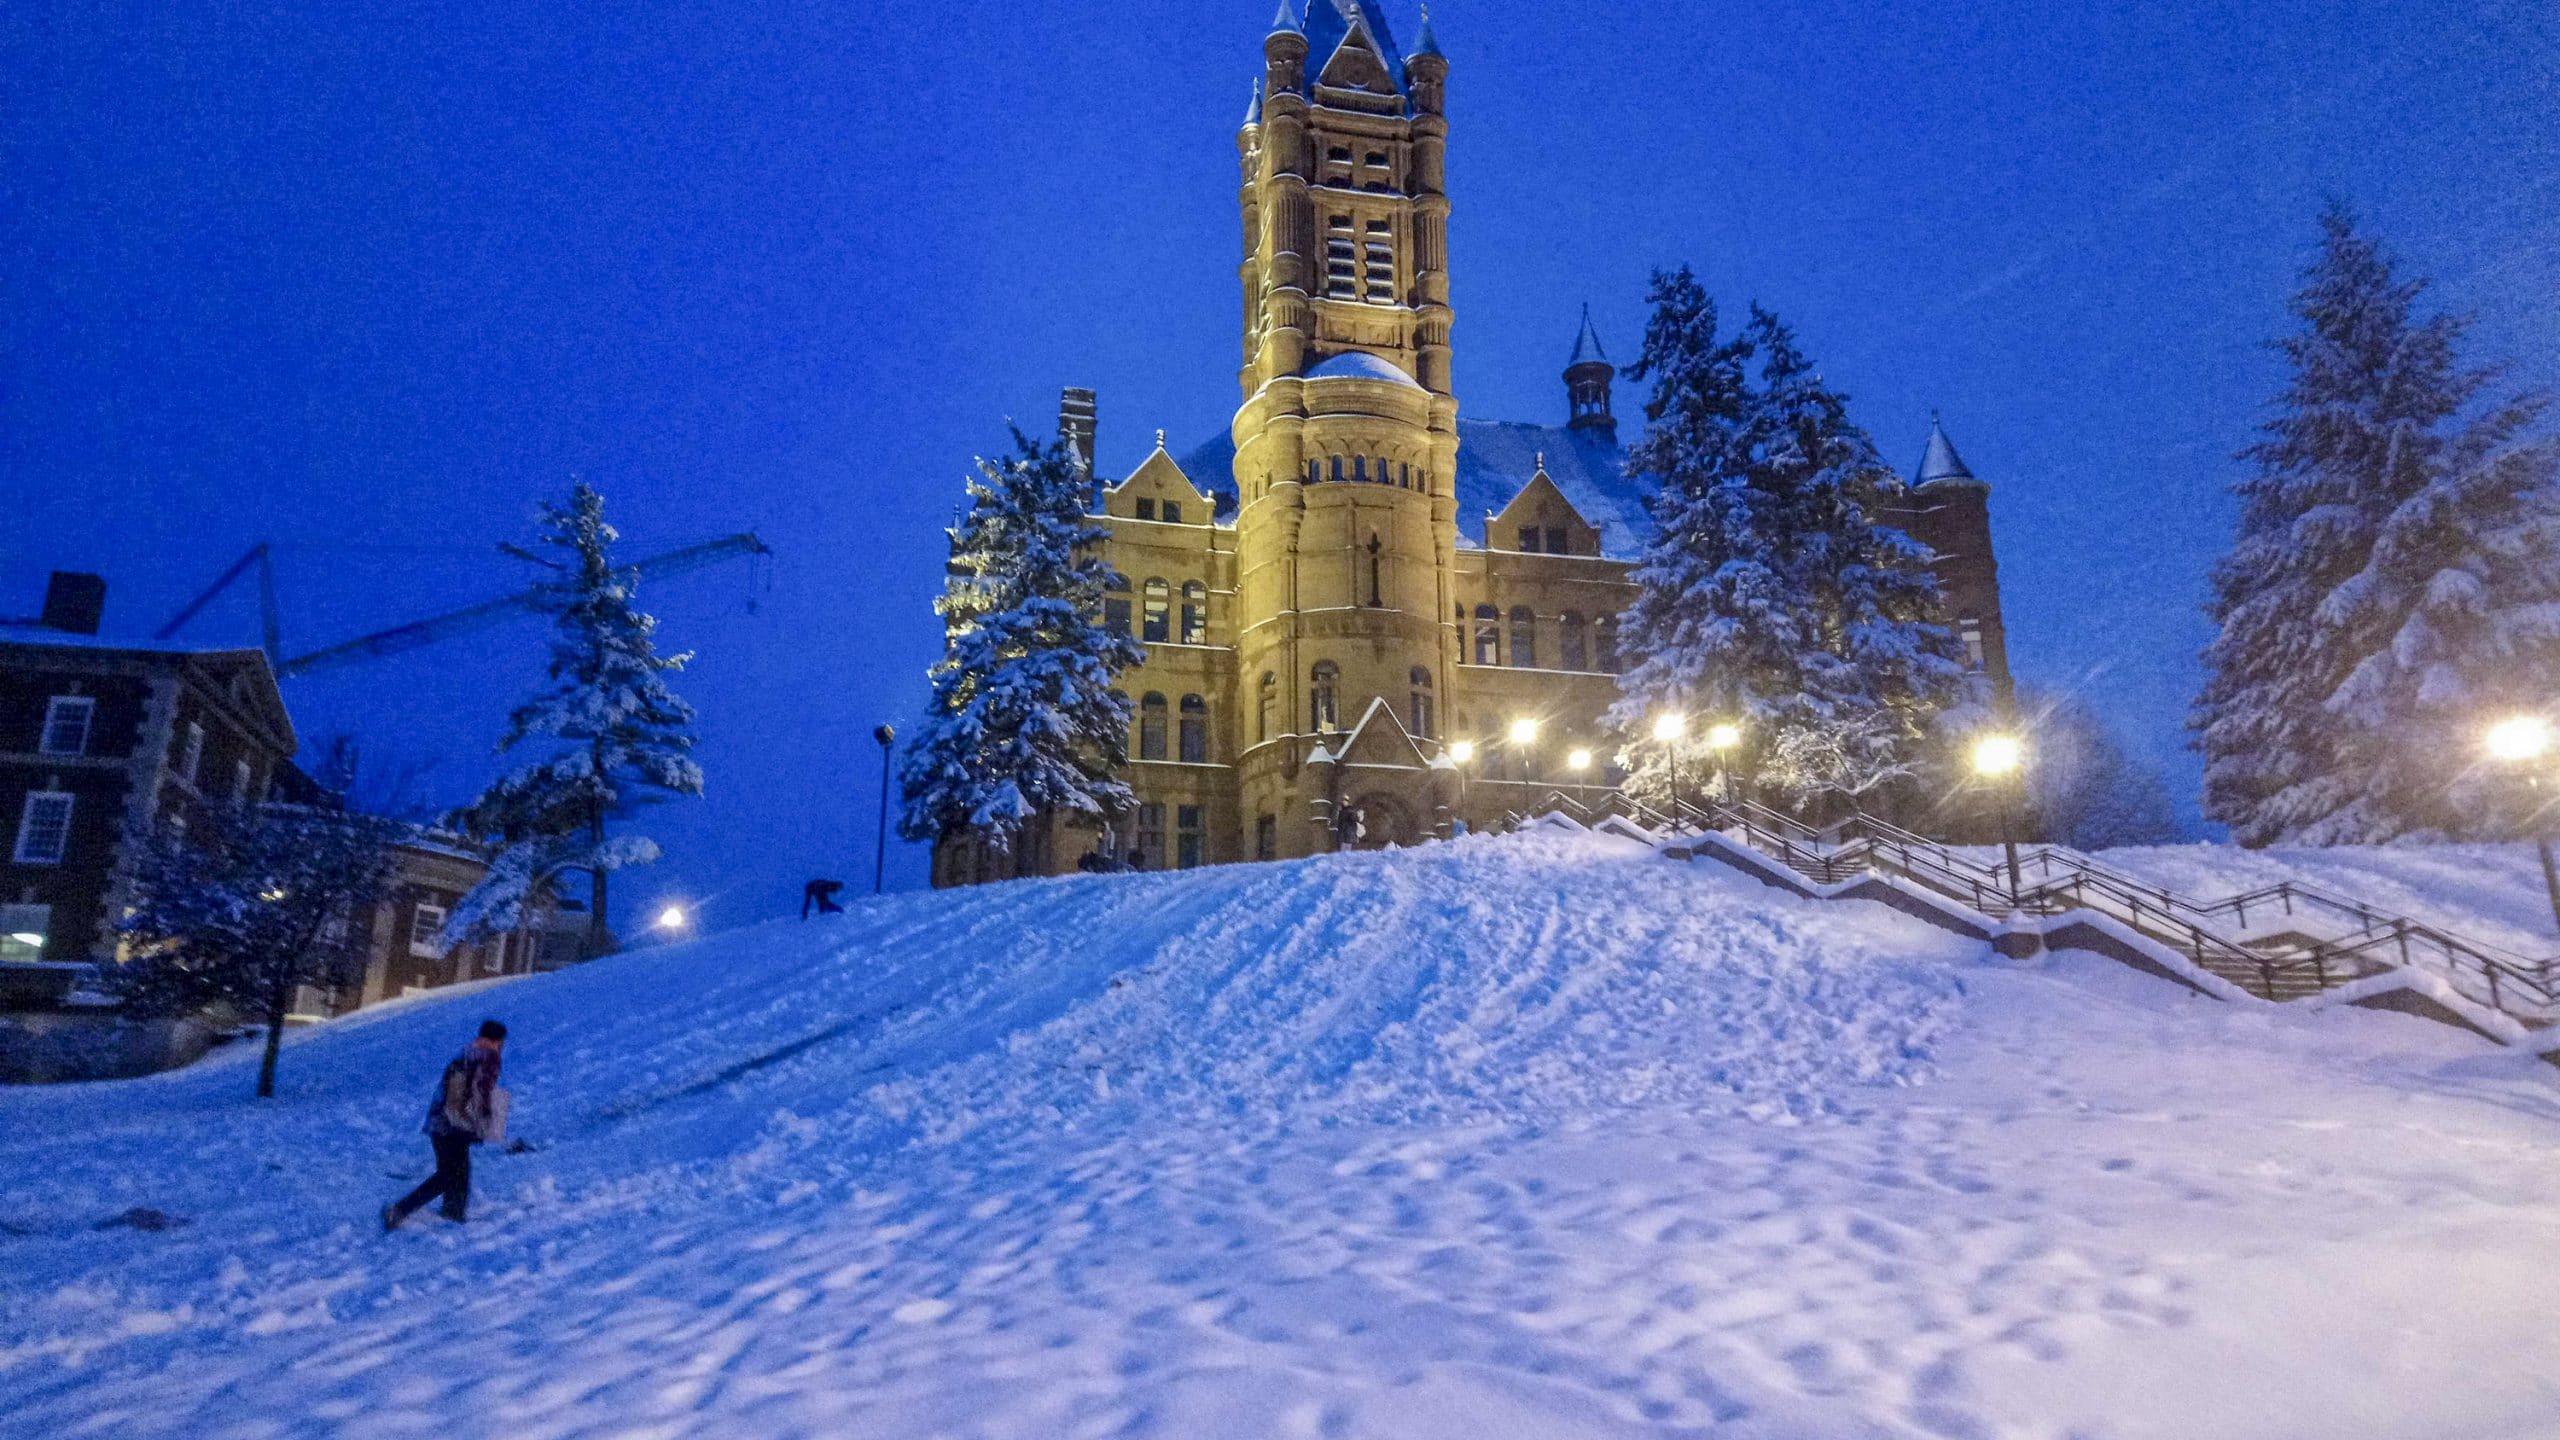 Snow Day - Dec. 2, 2019 - Crouse College